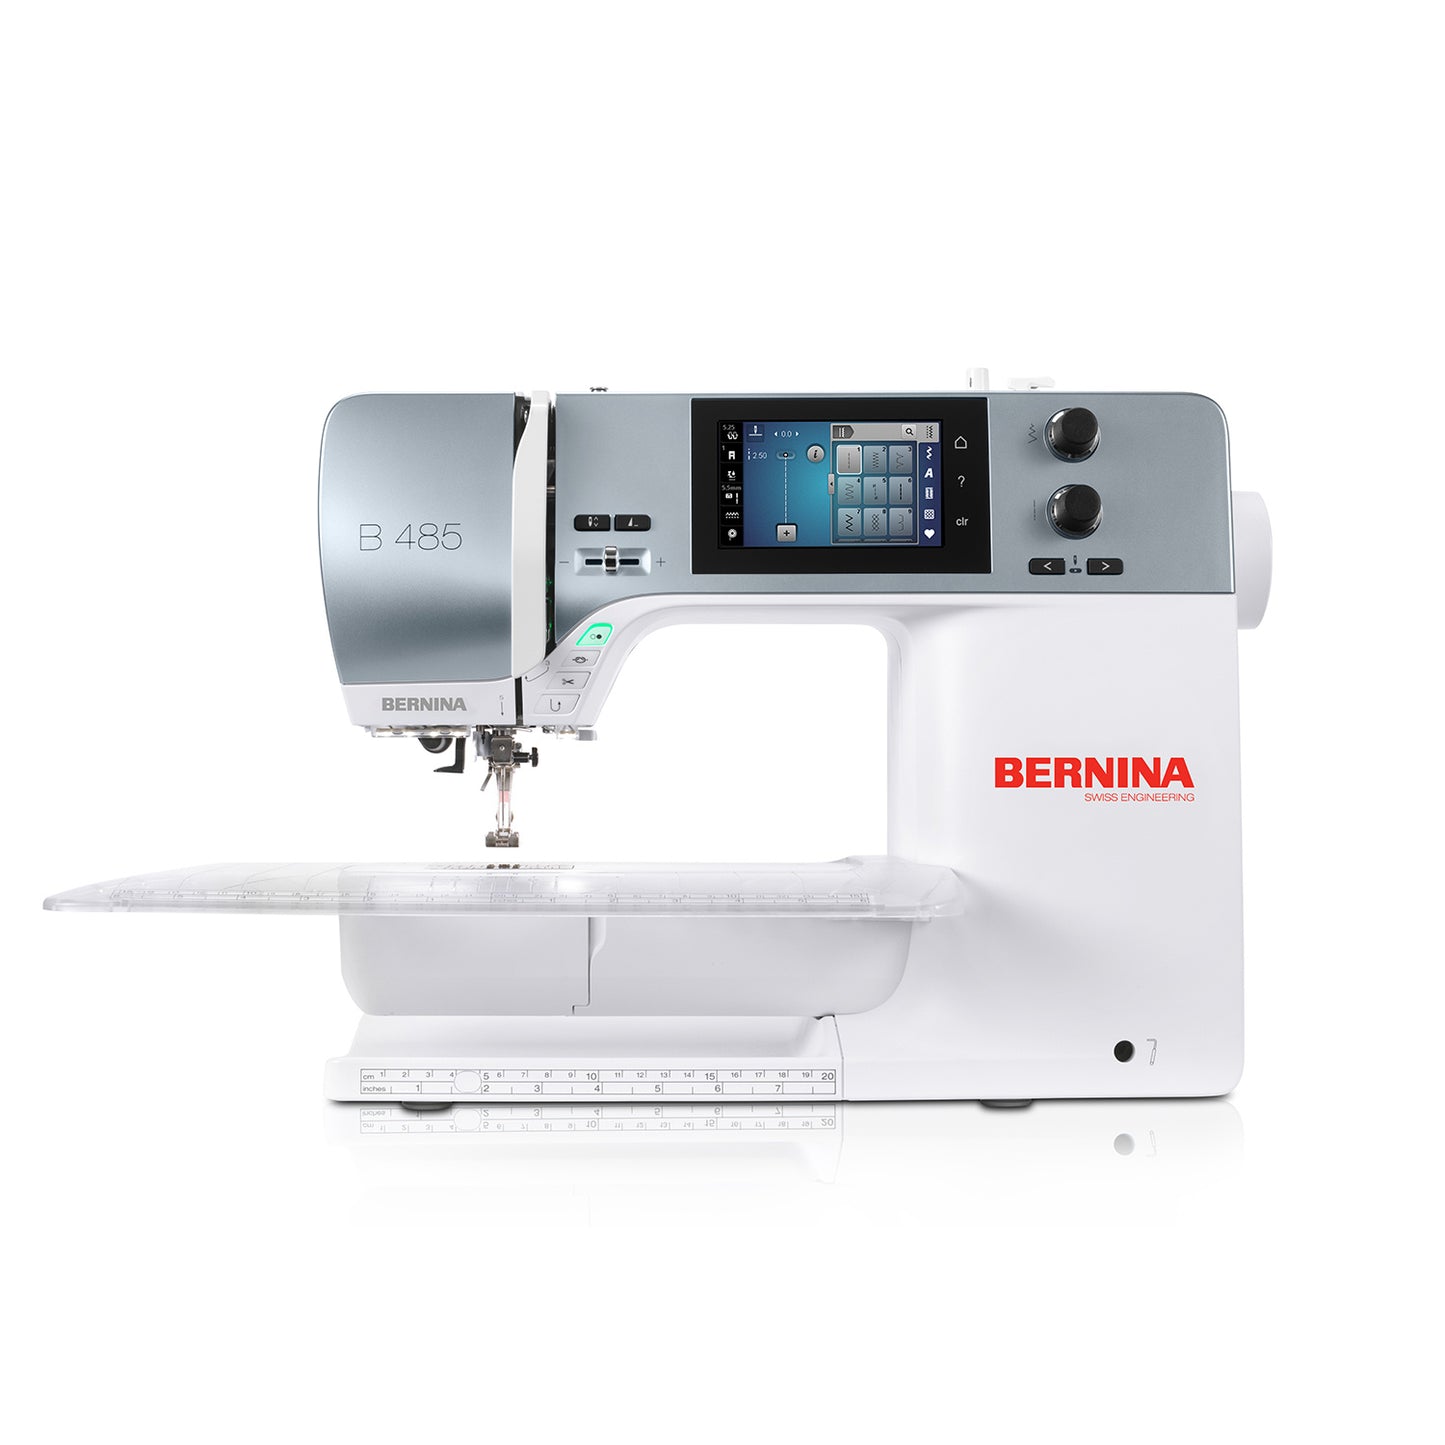 Bernina 485 - Sewing and Quilting Machine Alternative View #1